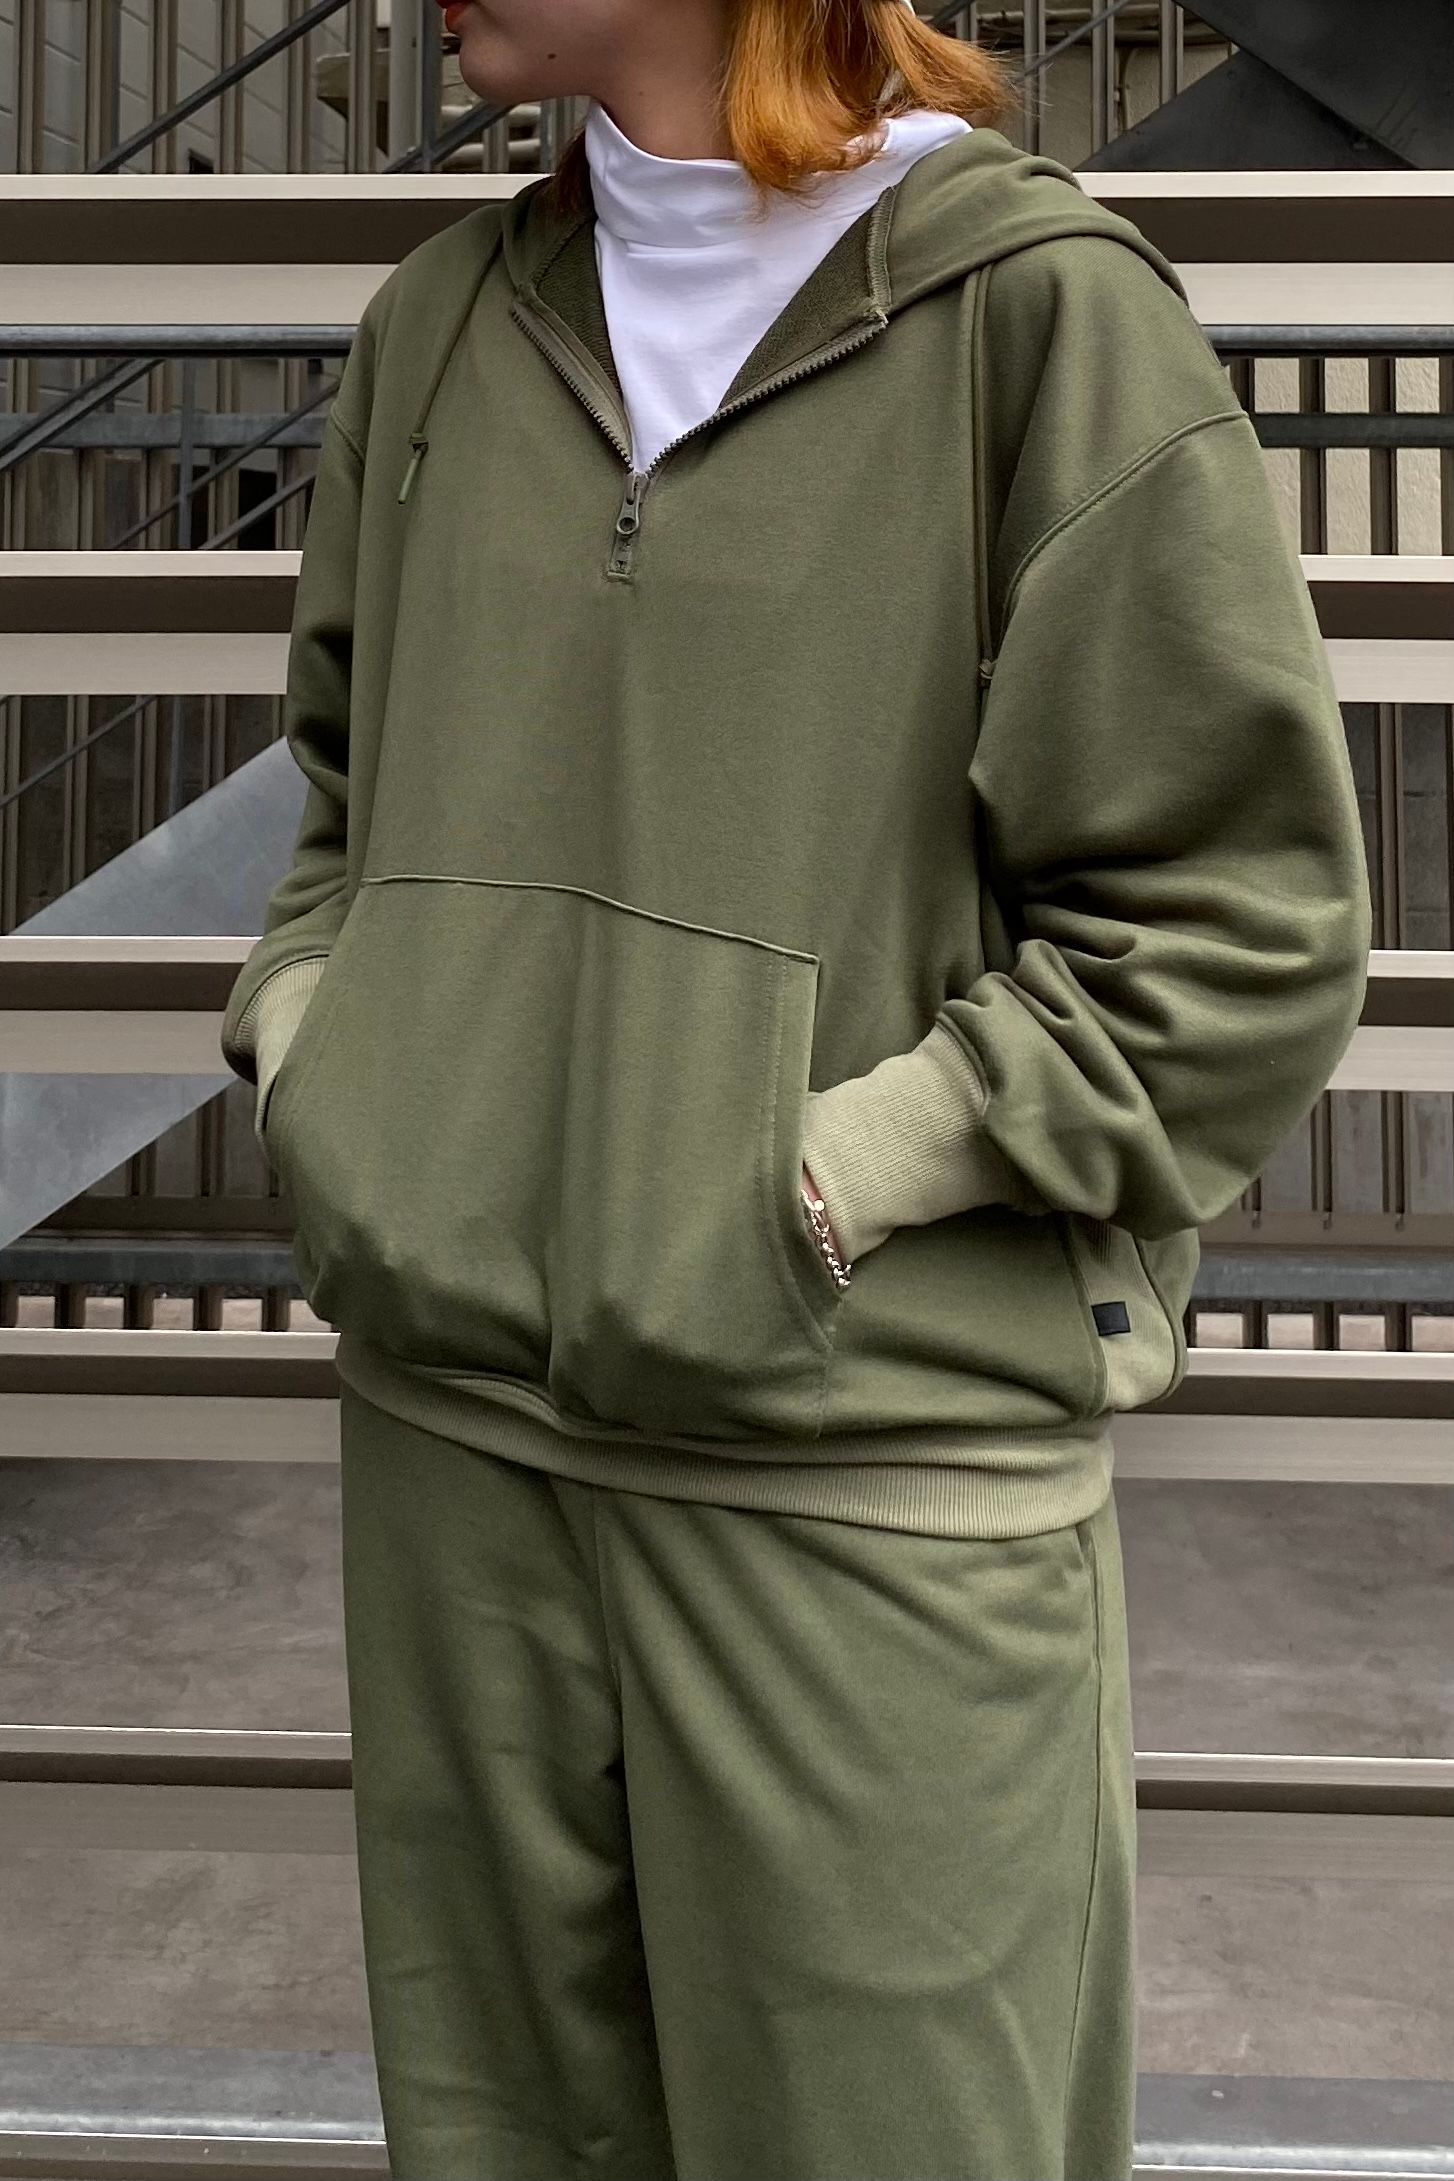 DAIWA PIER39 - women's tech sweat half zip hoodie -olive green ...